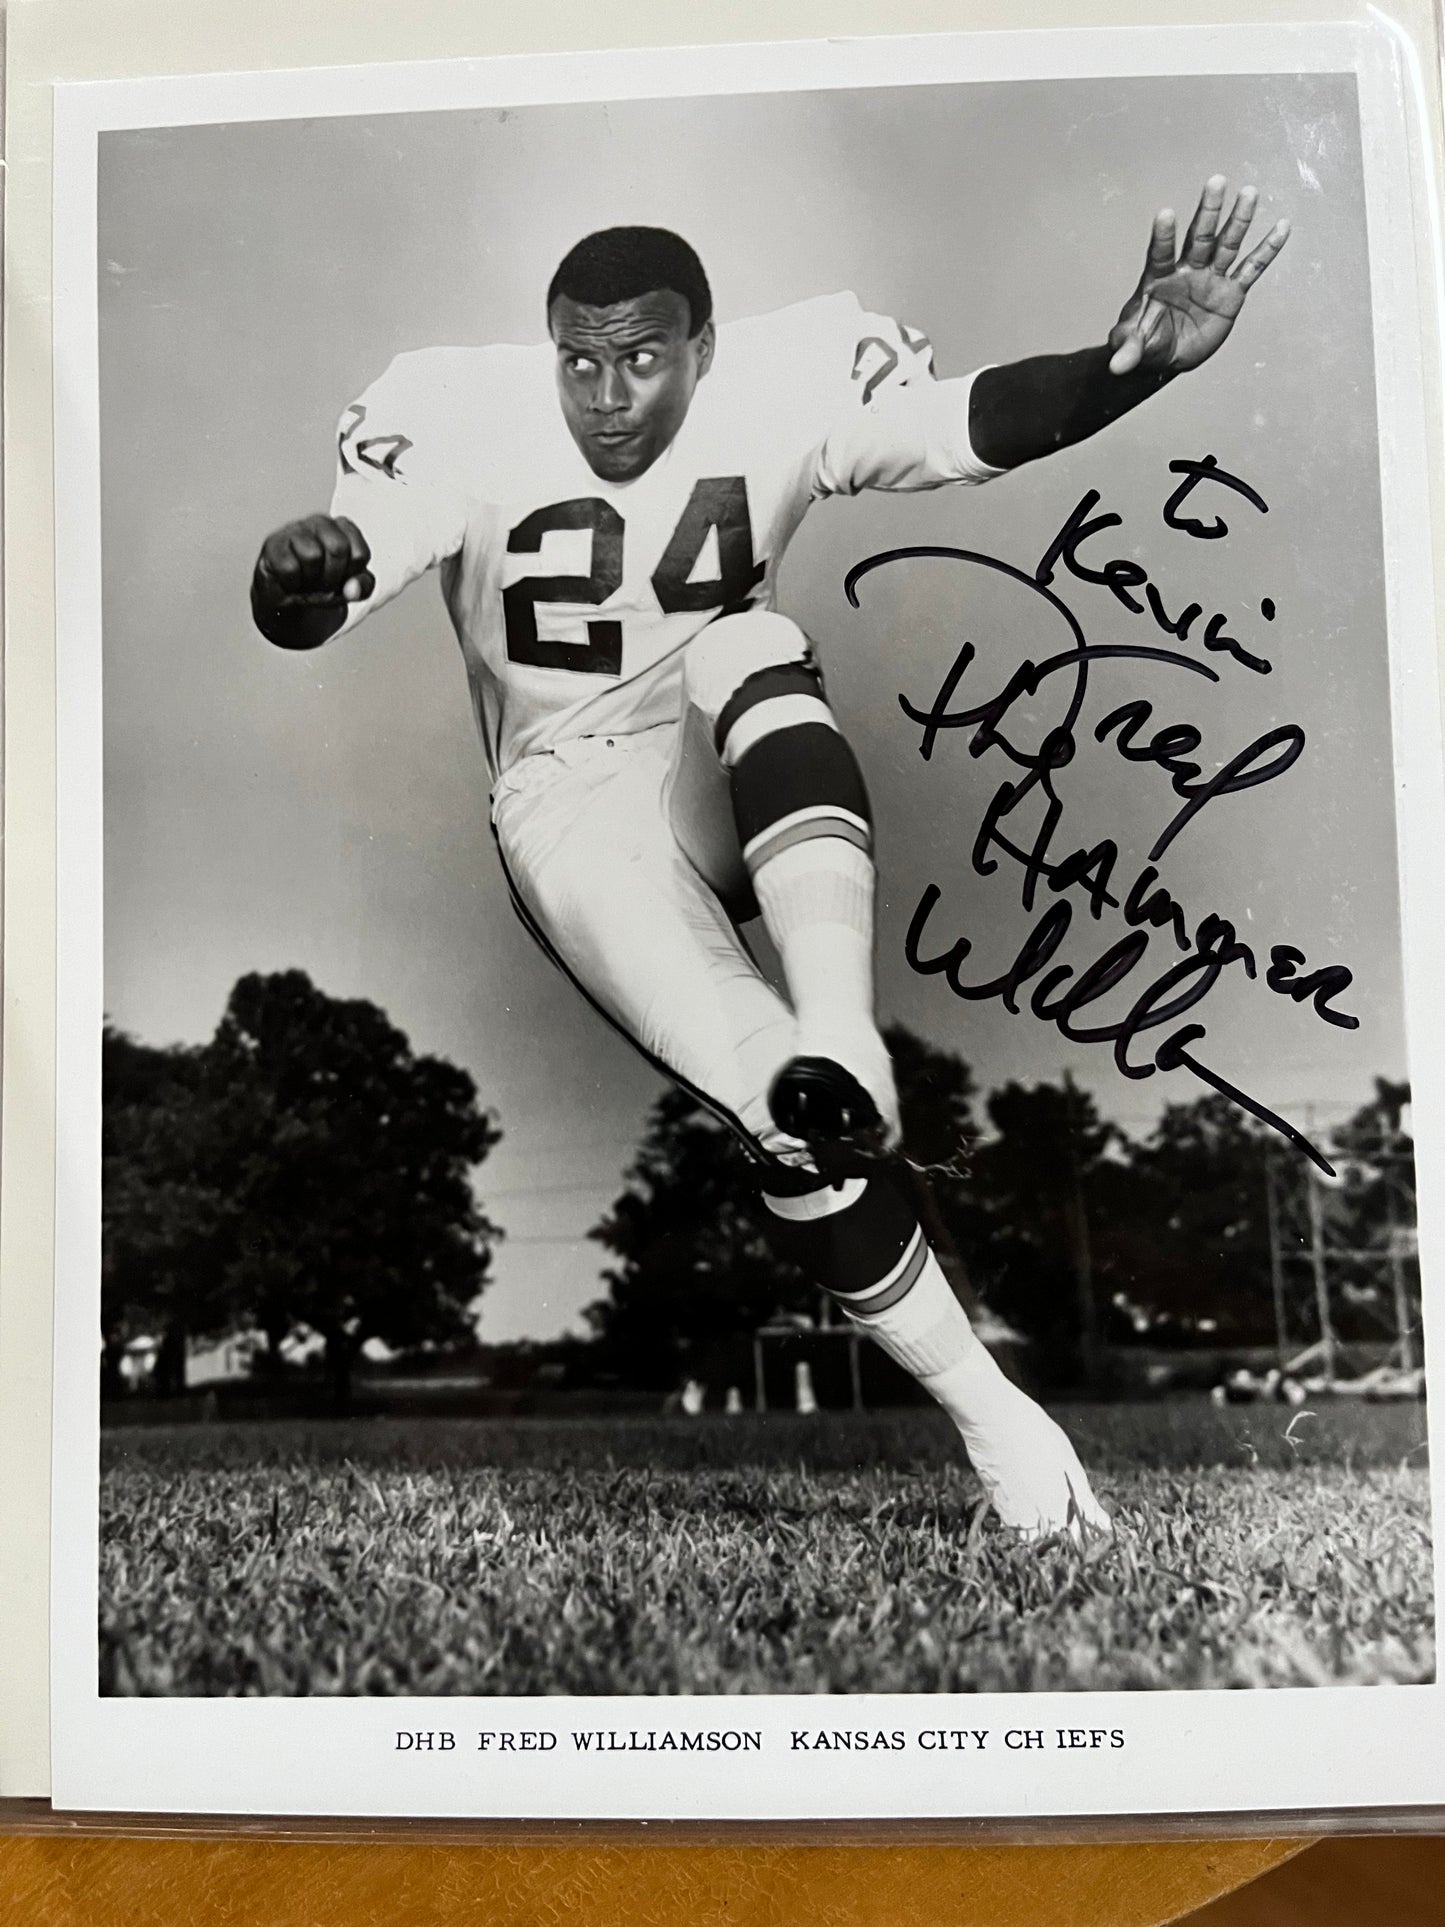 FRED WILLIAMSON, Kansas City Chiefs, autograph